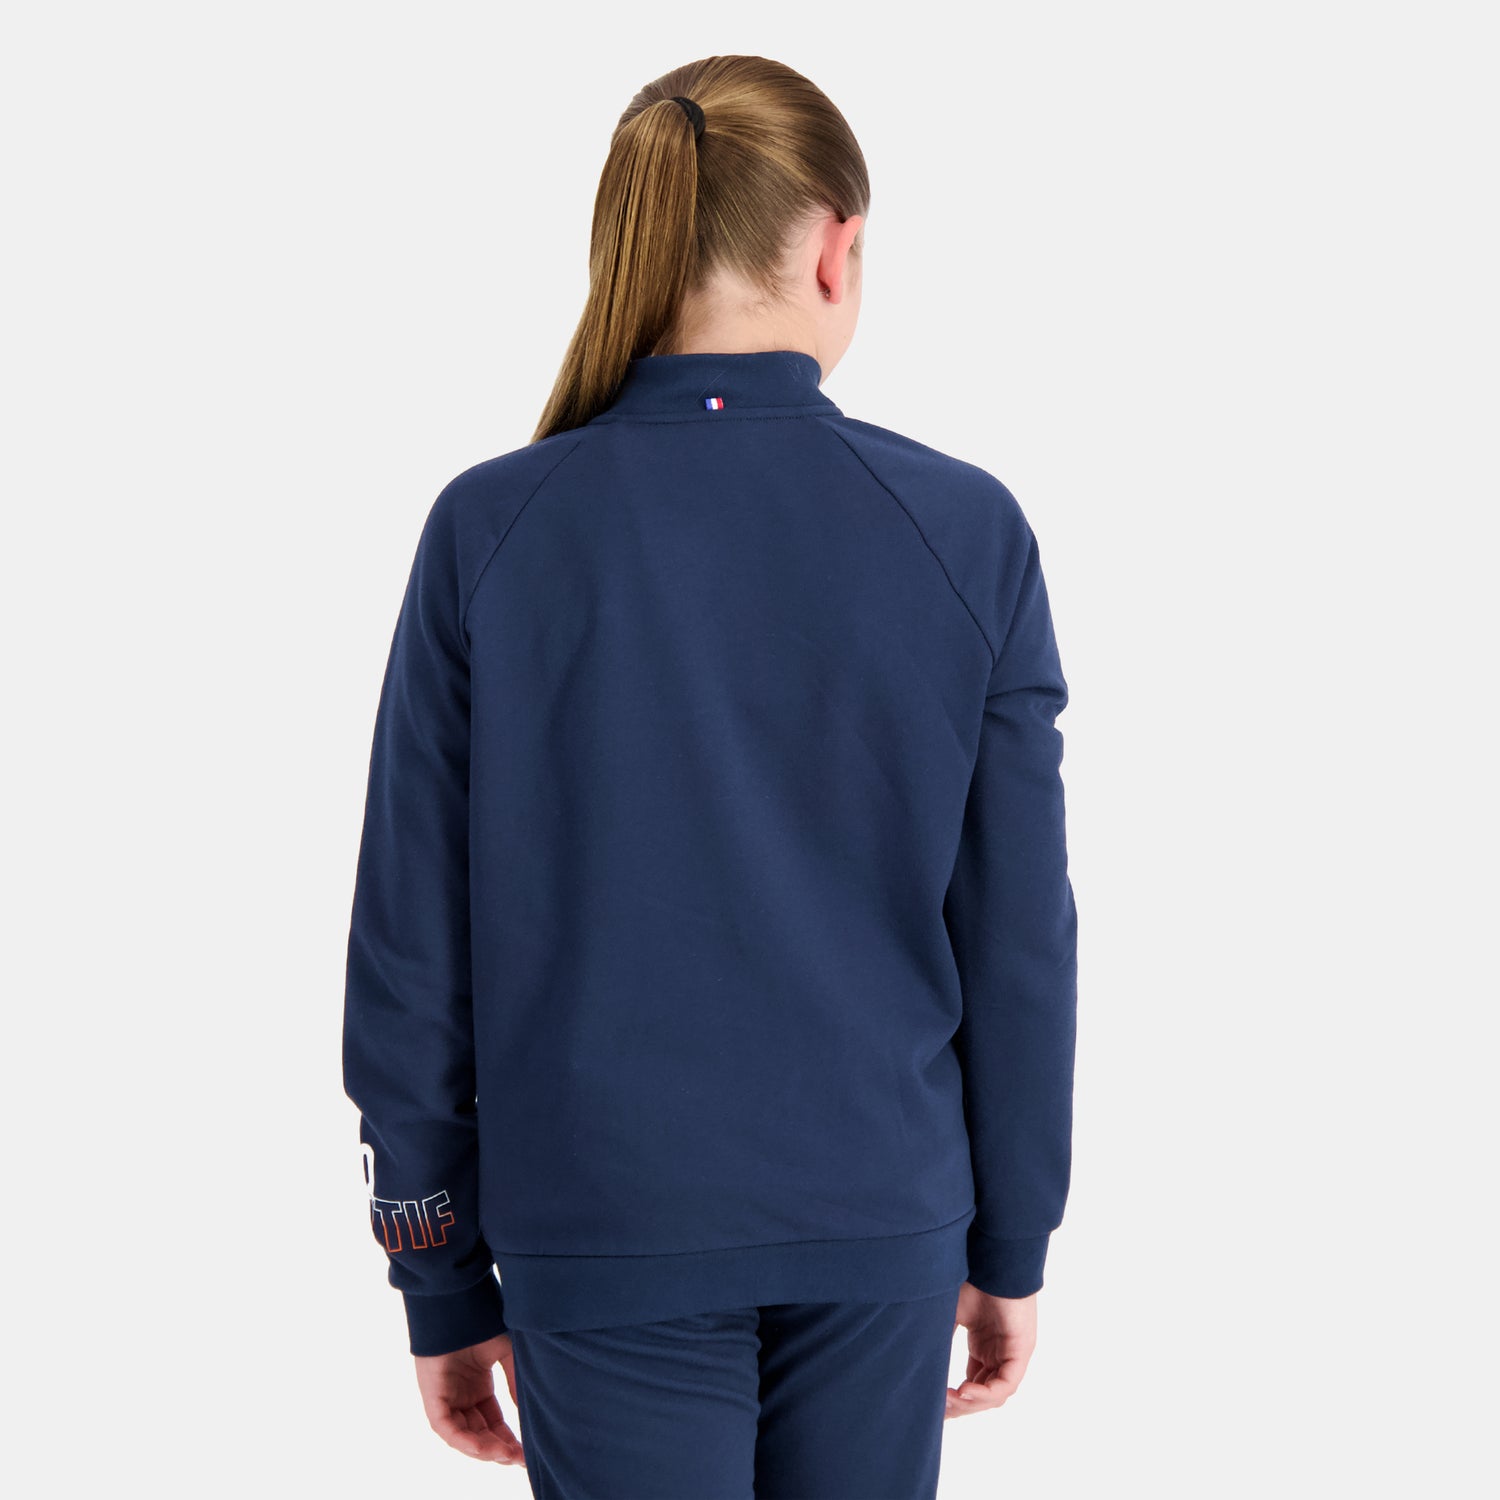 2410129-SAISON 2 FZ Sweat N°1 Enfant dress blues  | Sweatshirt for kids